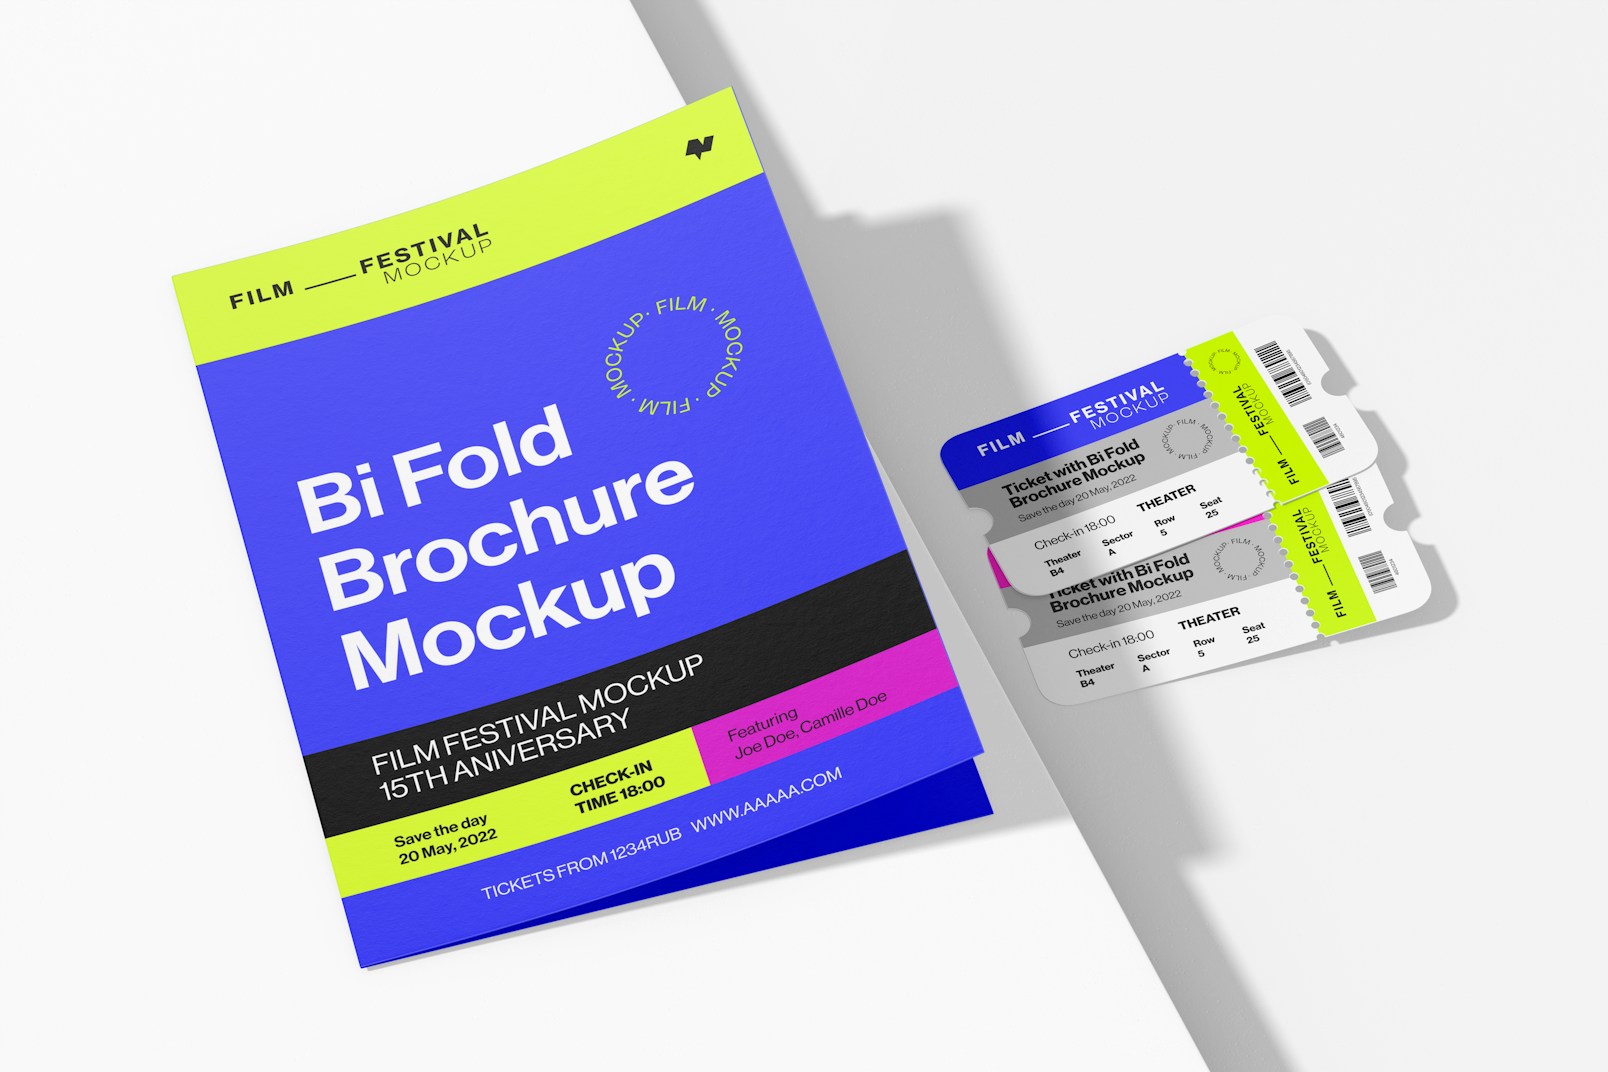 Ticket with Bi Fold Brochure Mockup, on Podium